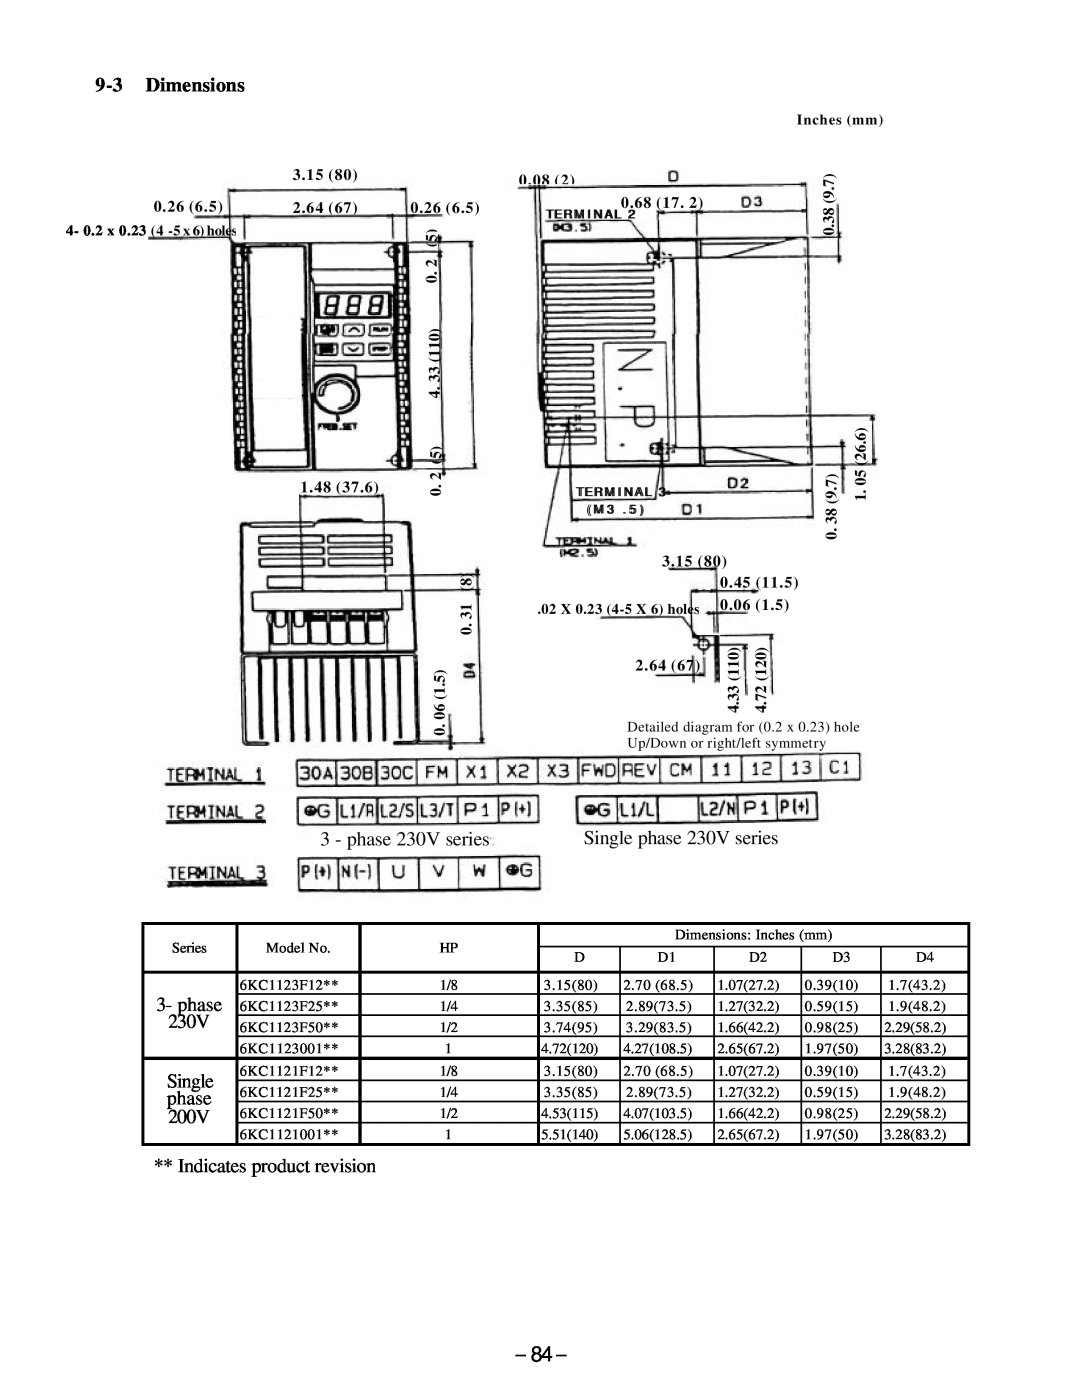 GE AF-300, C11 manual Dimensions, Single phase 230V series, 200V, Indicates product revision 